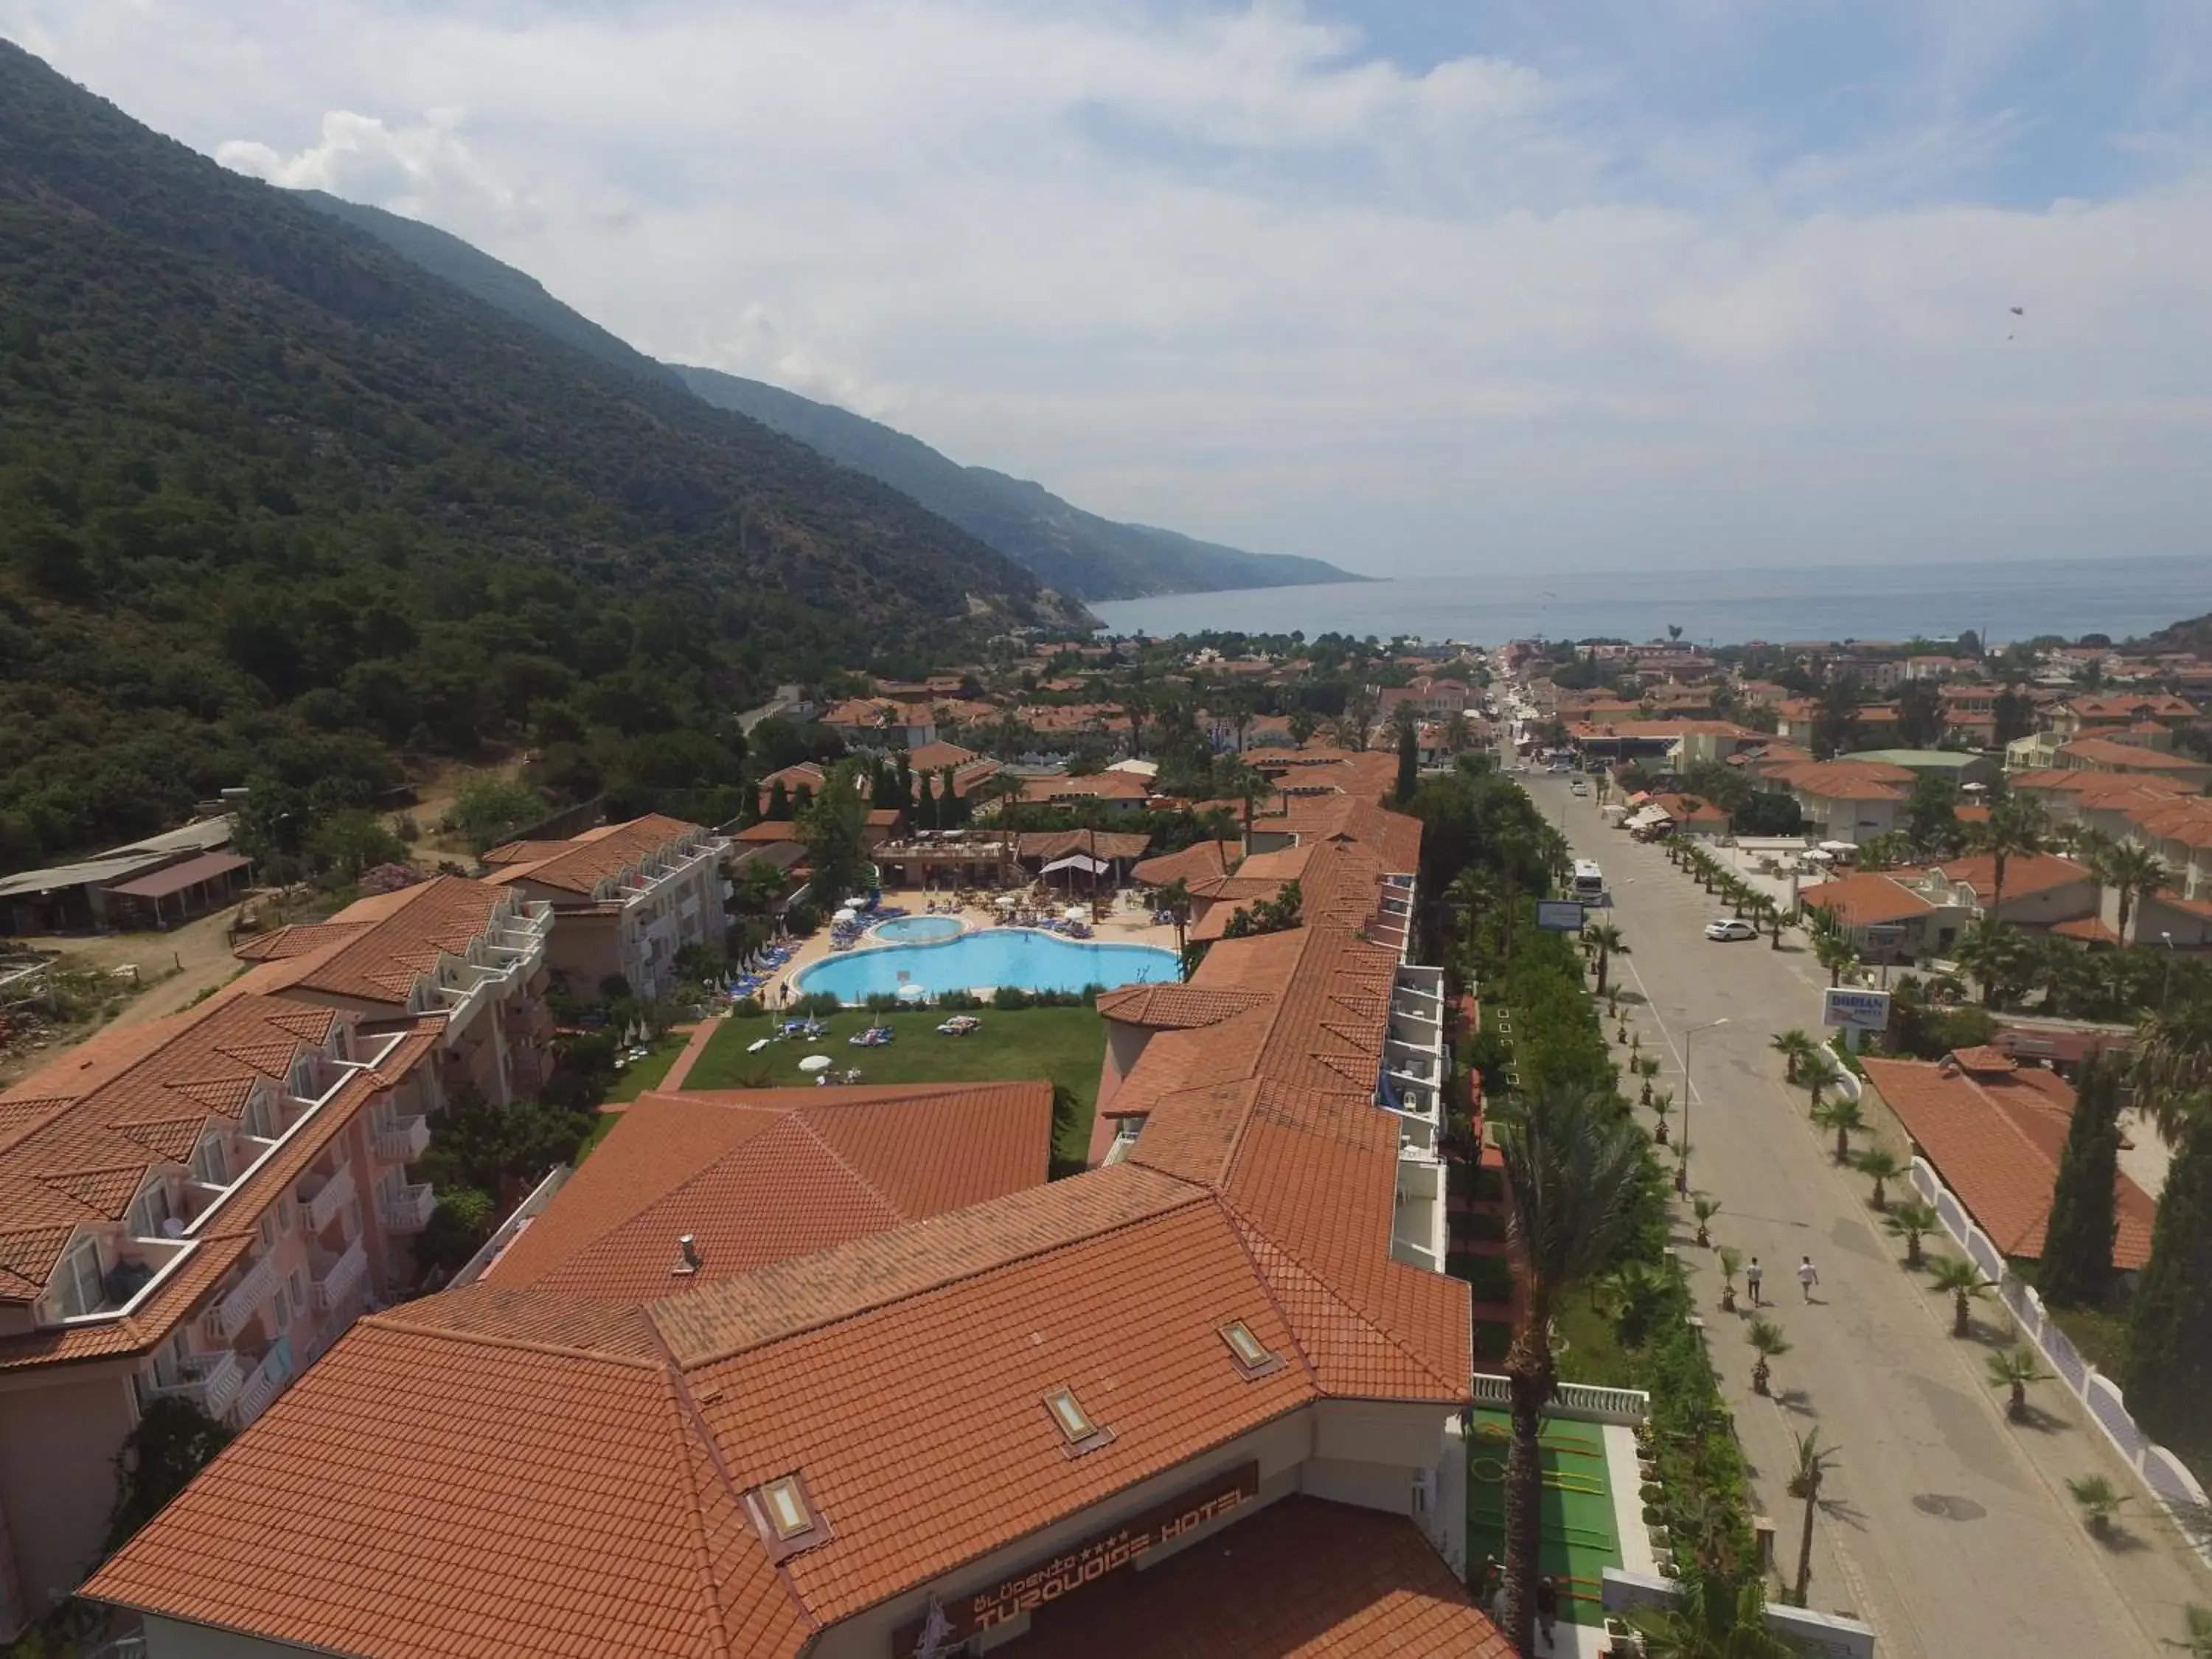 Day, Bird's-eye View in Oludeniz Turquoise Hotel